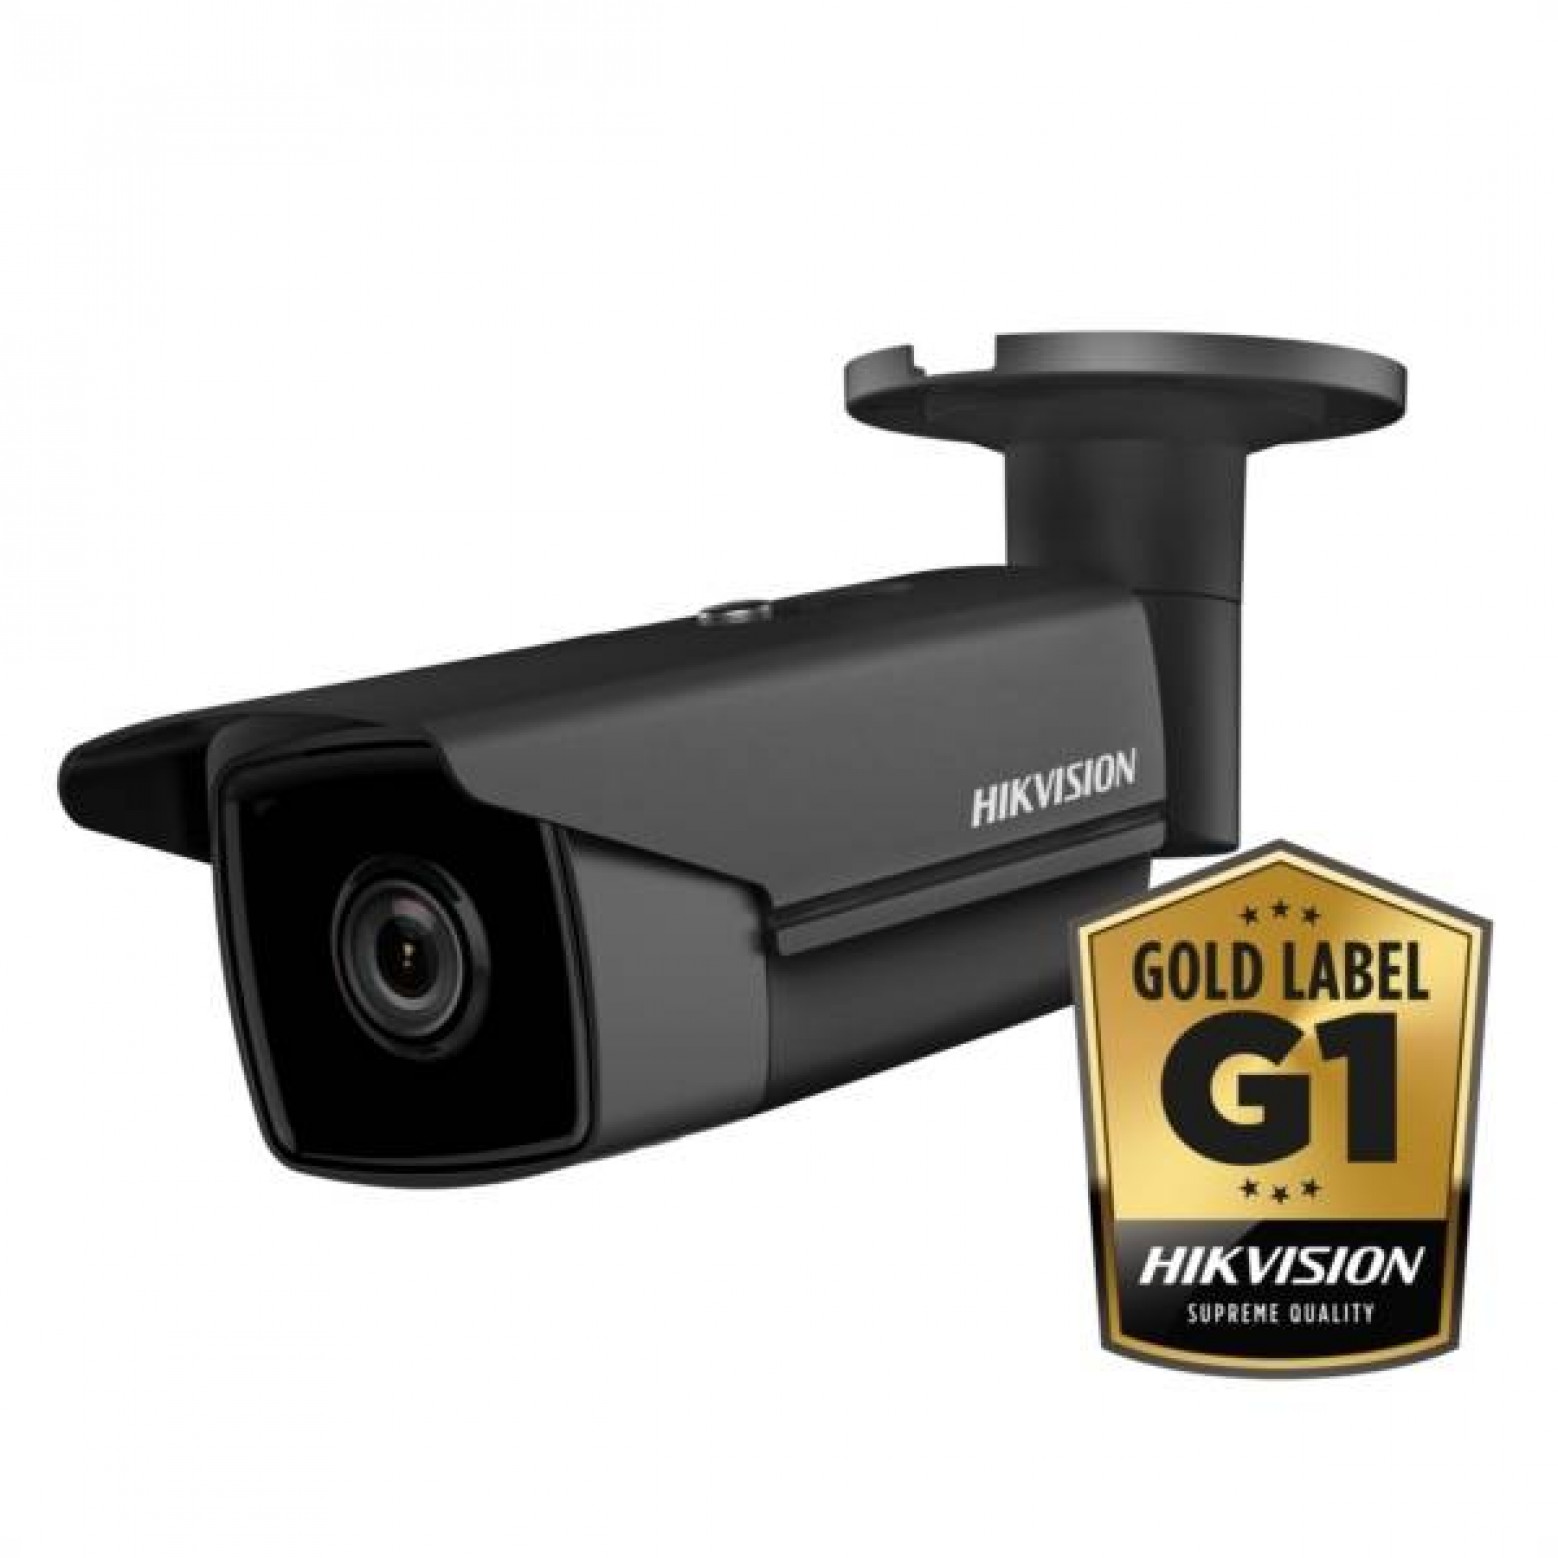 Hikvision DS-2CD2T55FWD-I5, Bullet Camera, Black Edition, 5MP, 50m IR, WDR, Ultra Low Light